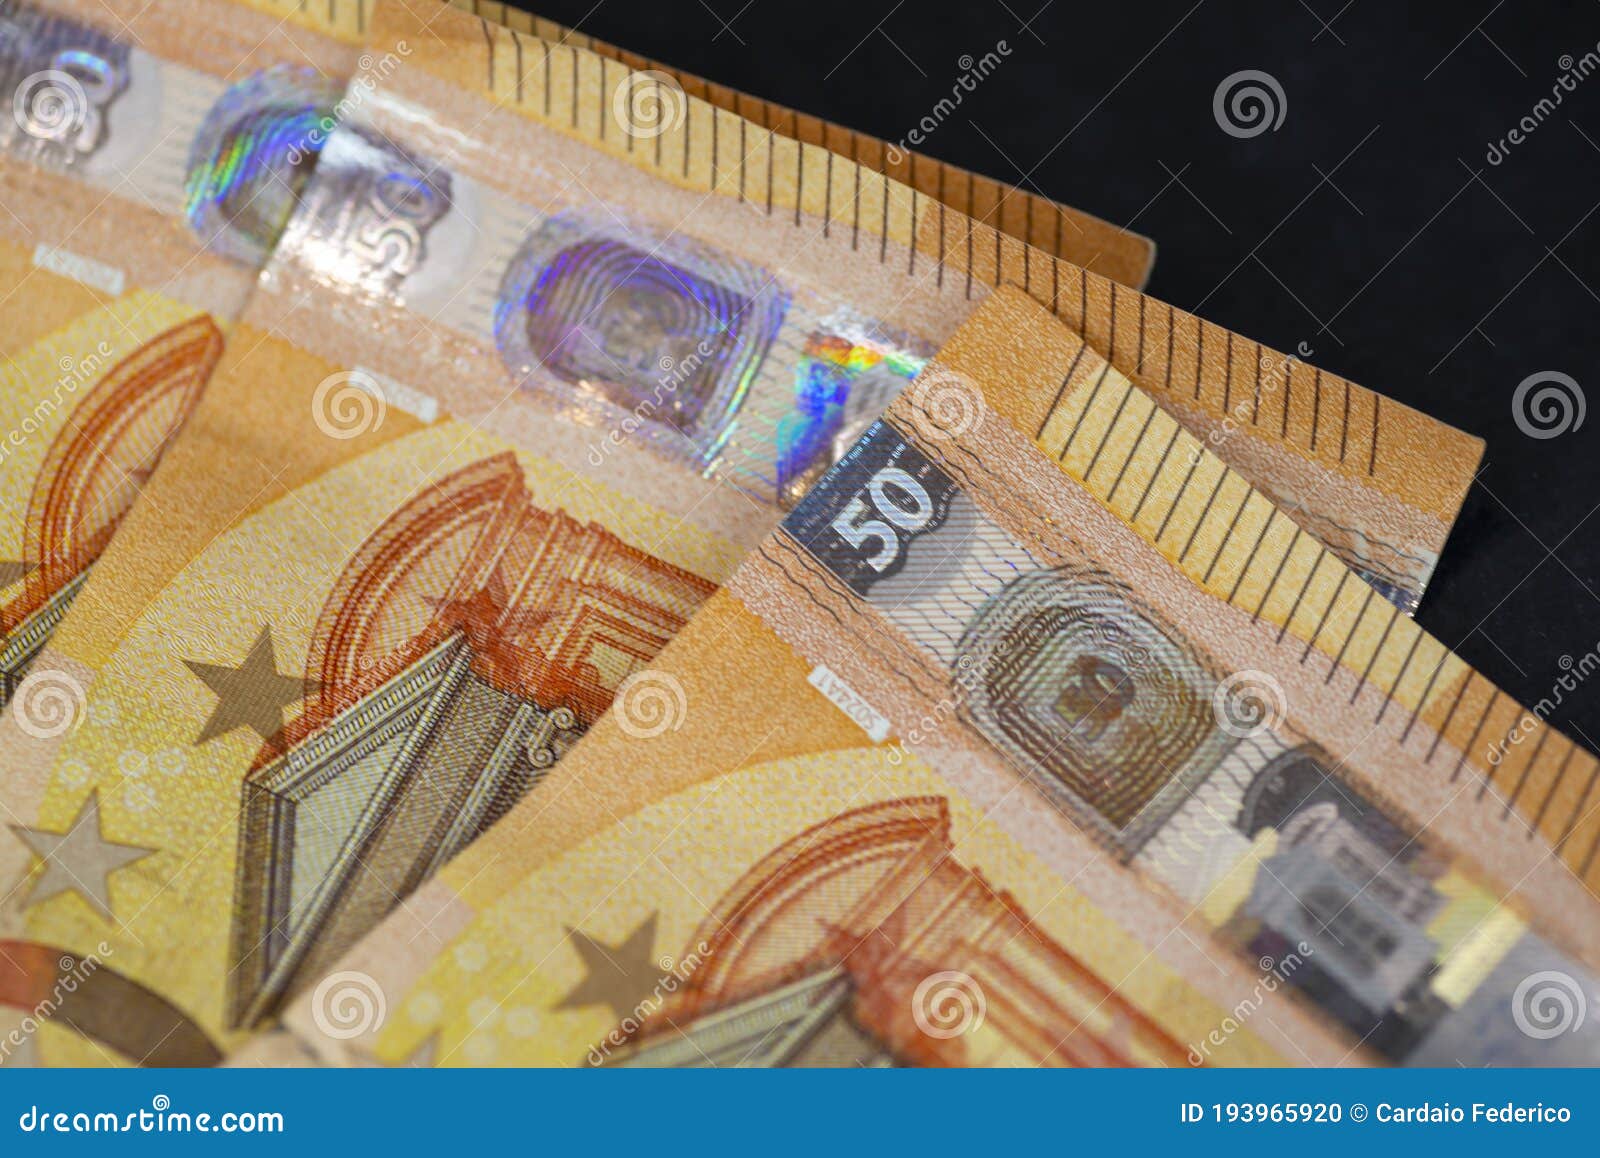 detail of 50 euro banknotes